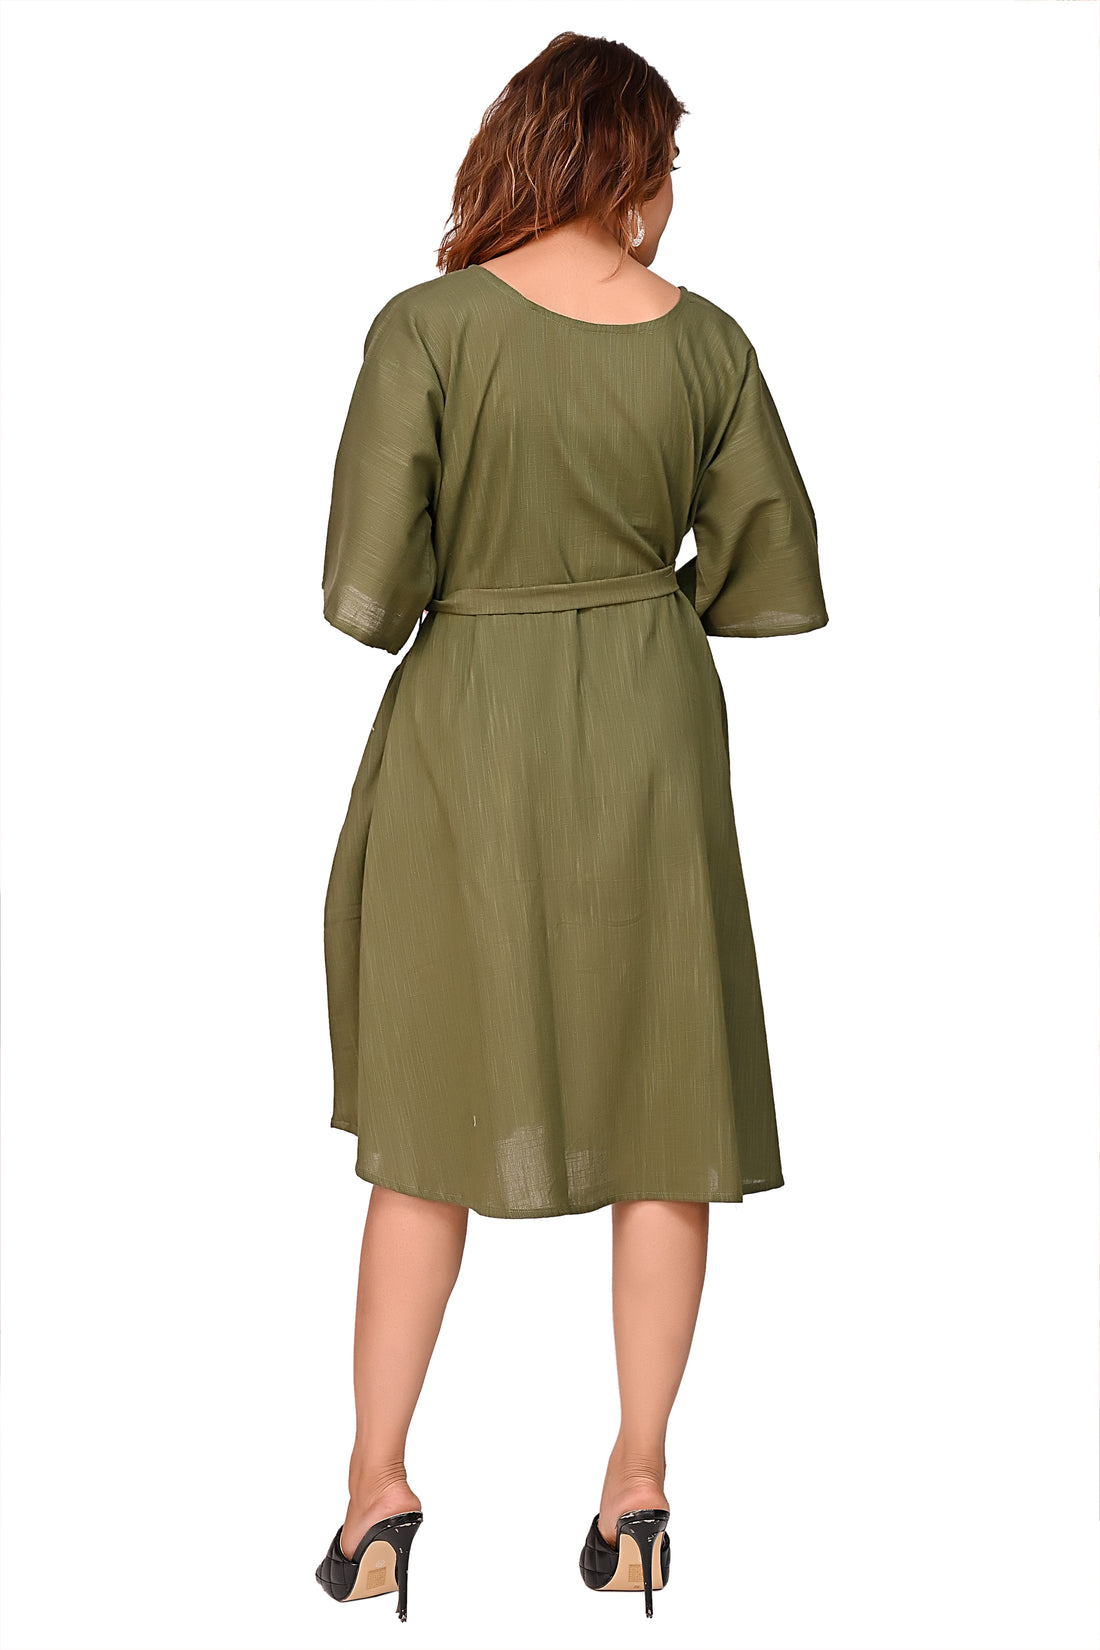 Nirmal online Premium Quality Cotton Slub Tunic Dress for Women in Olive Green Colour